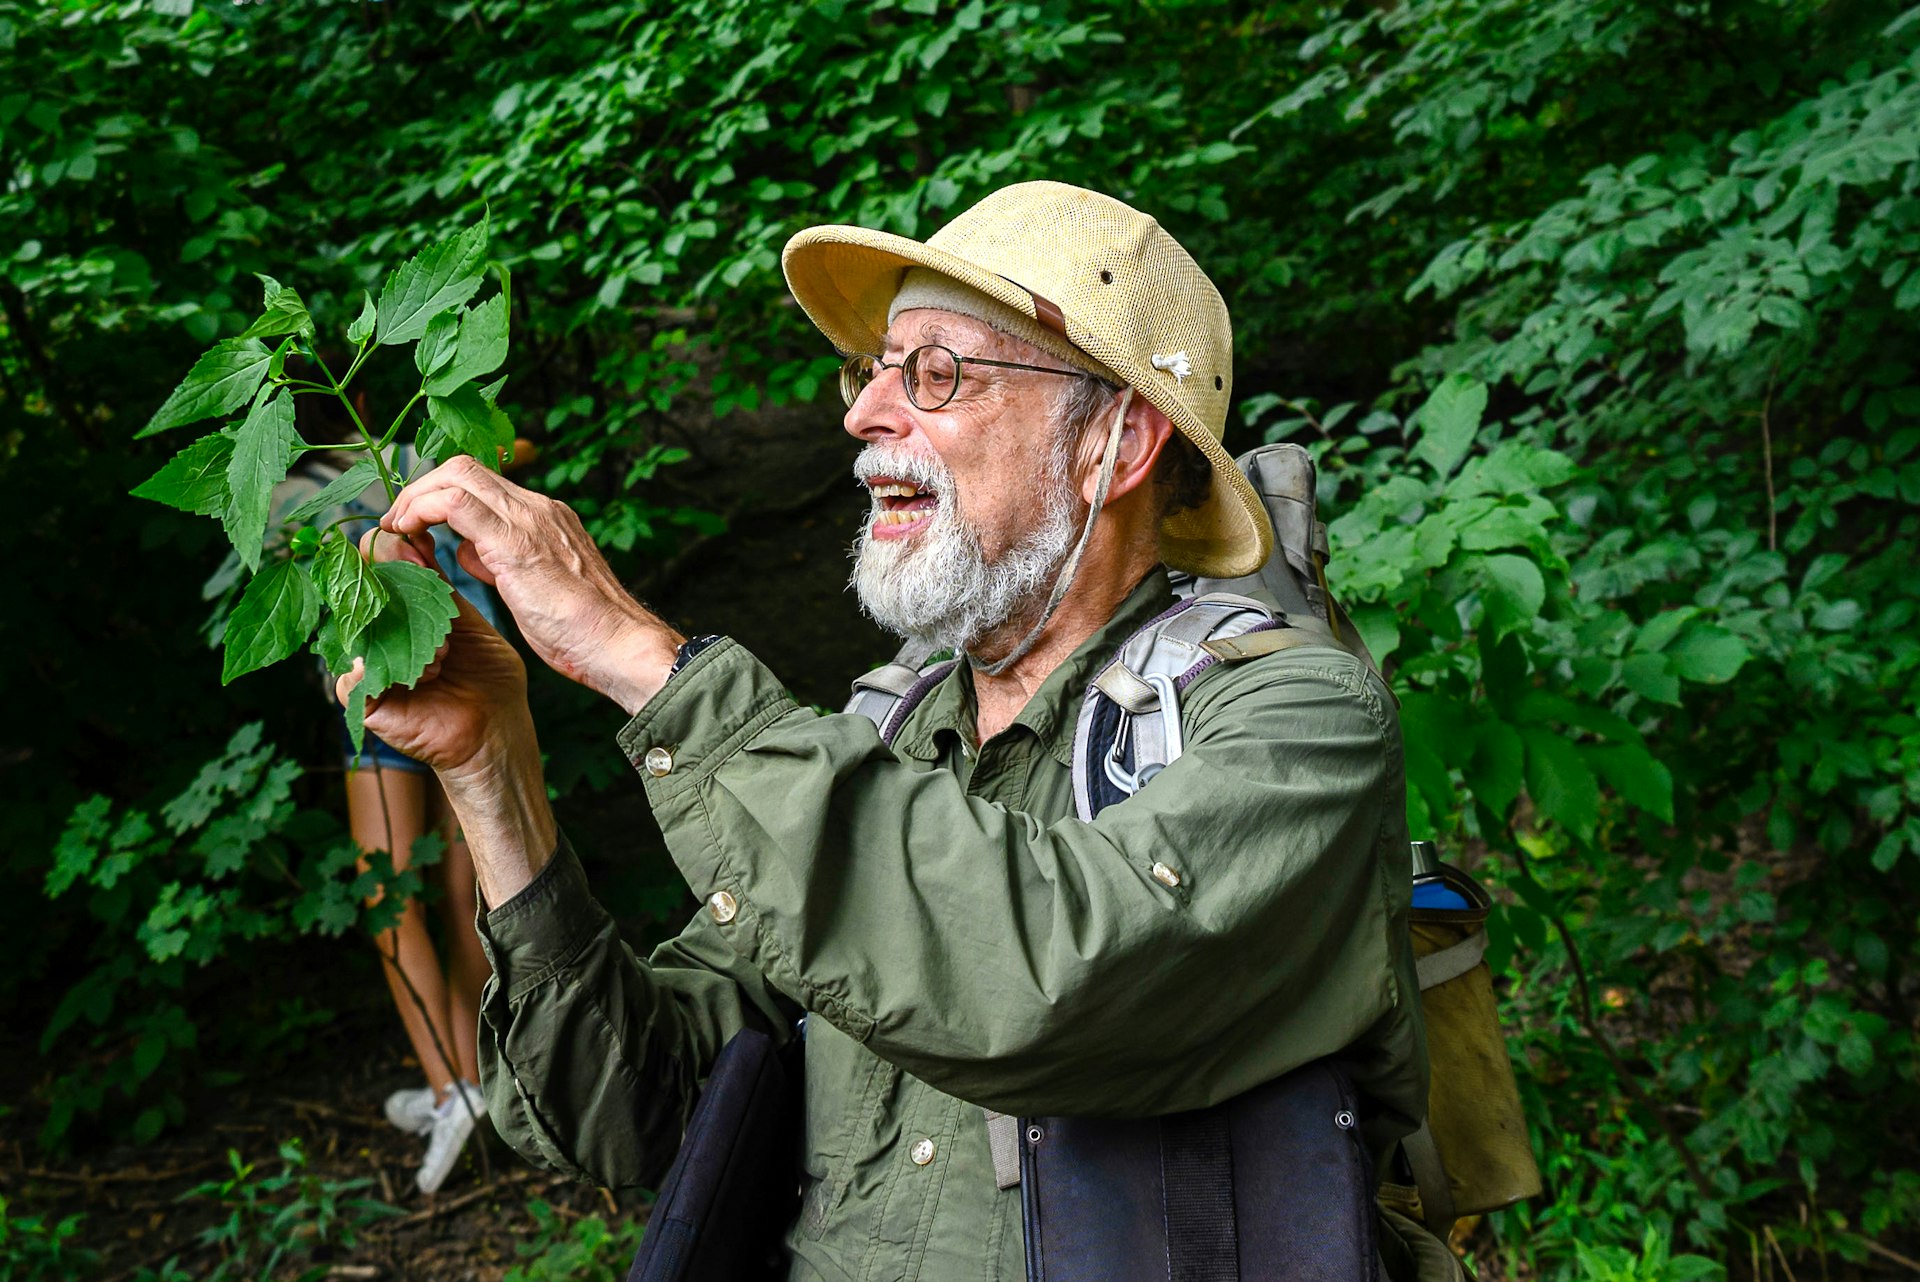 Steve "Wildman" Brill foraging tour in Central Park.